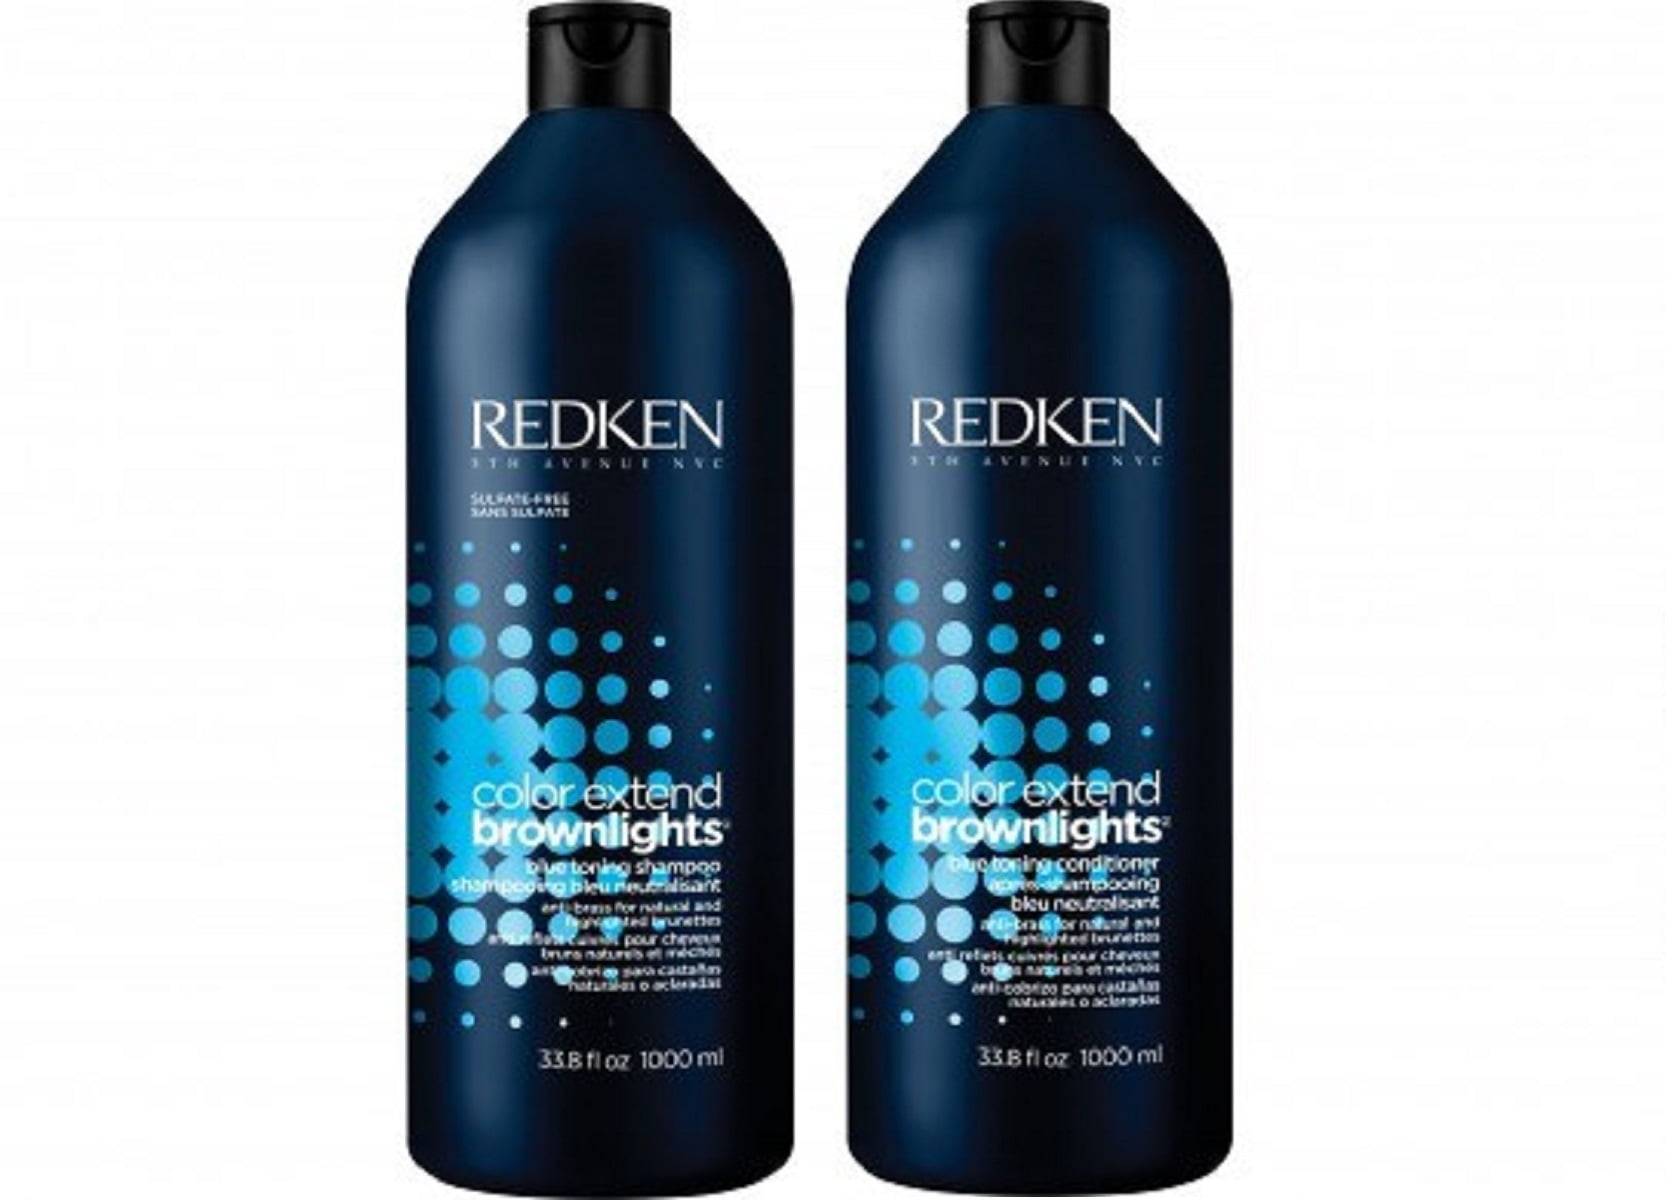 3. "Redken Color Extend Brownlights Blue Toning Shampoo" - wide 6